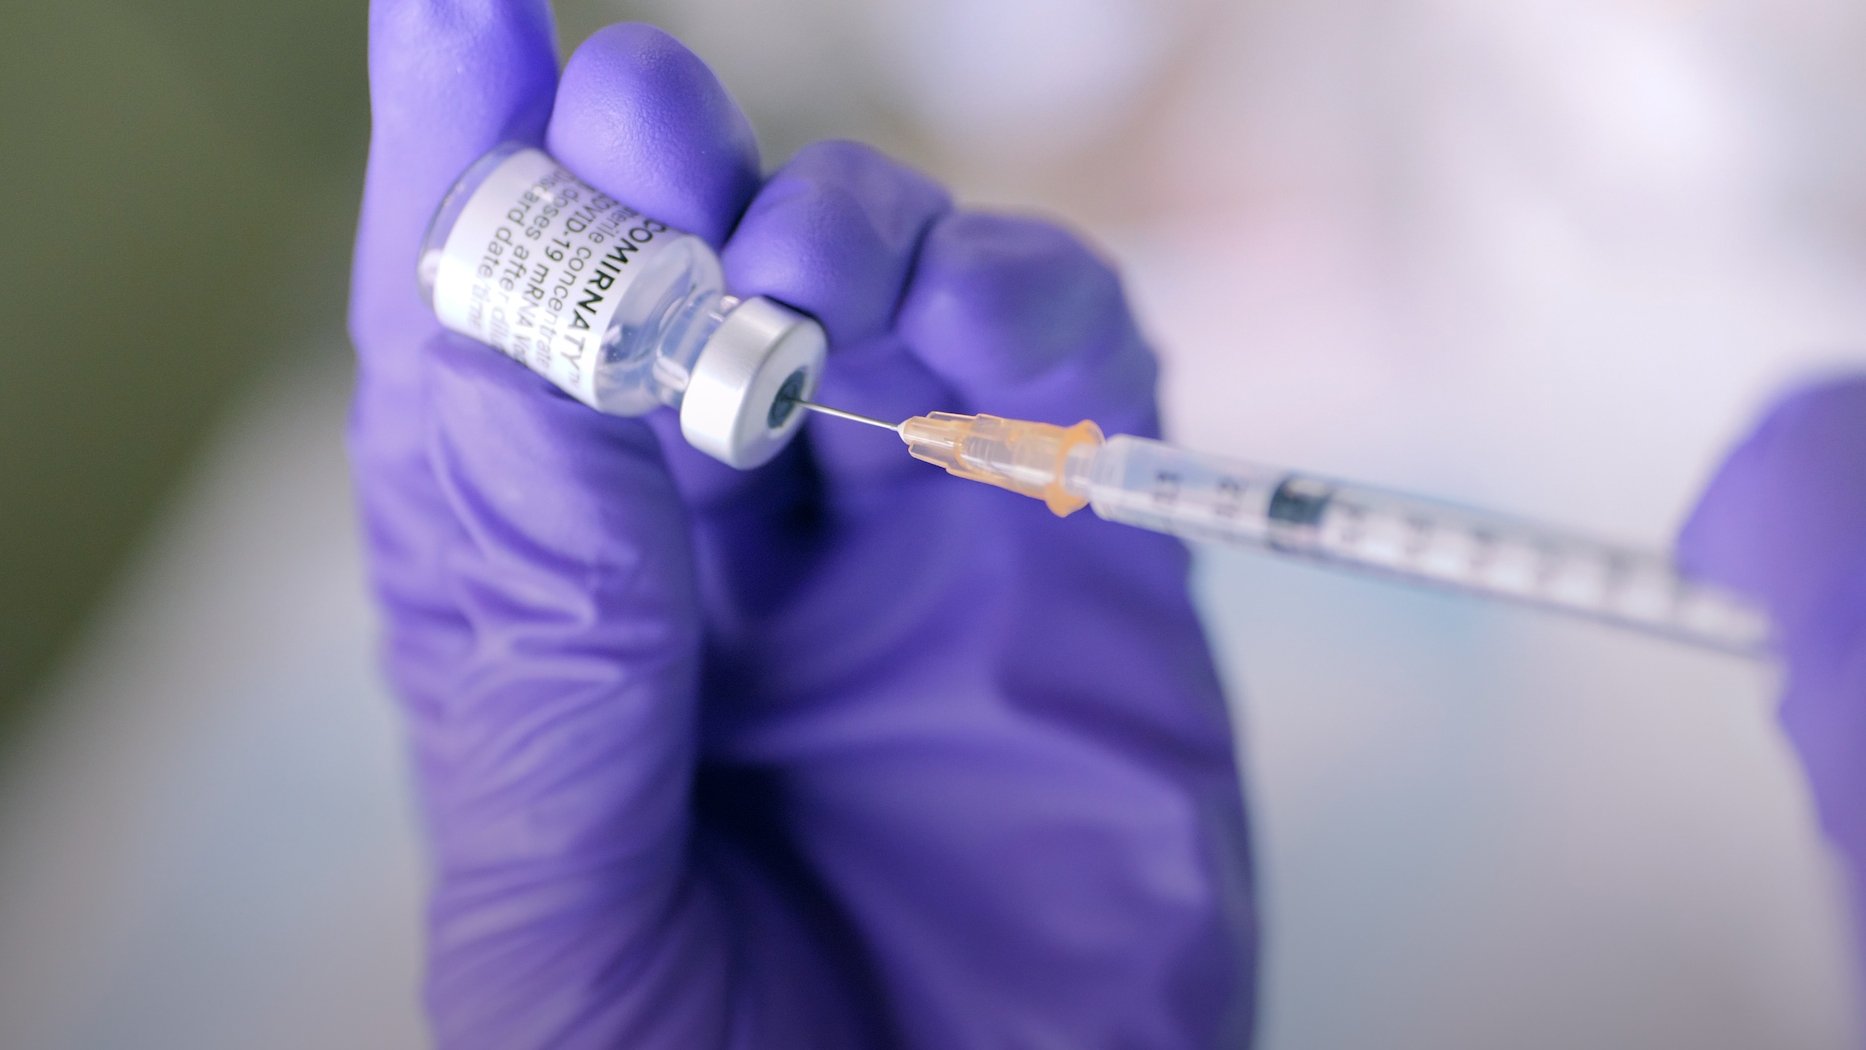 Photo: Handling the COVID-19 vaccine.